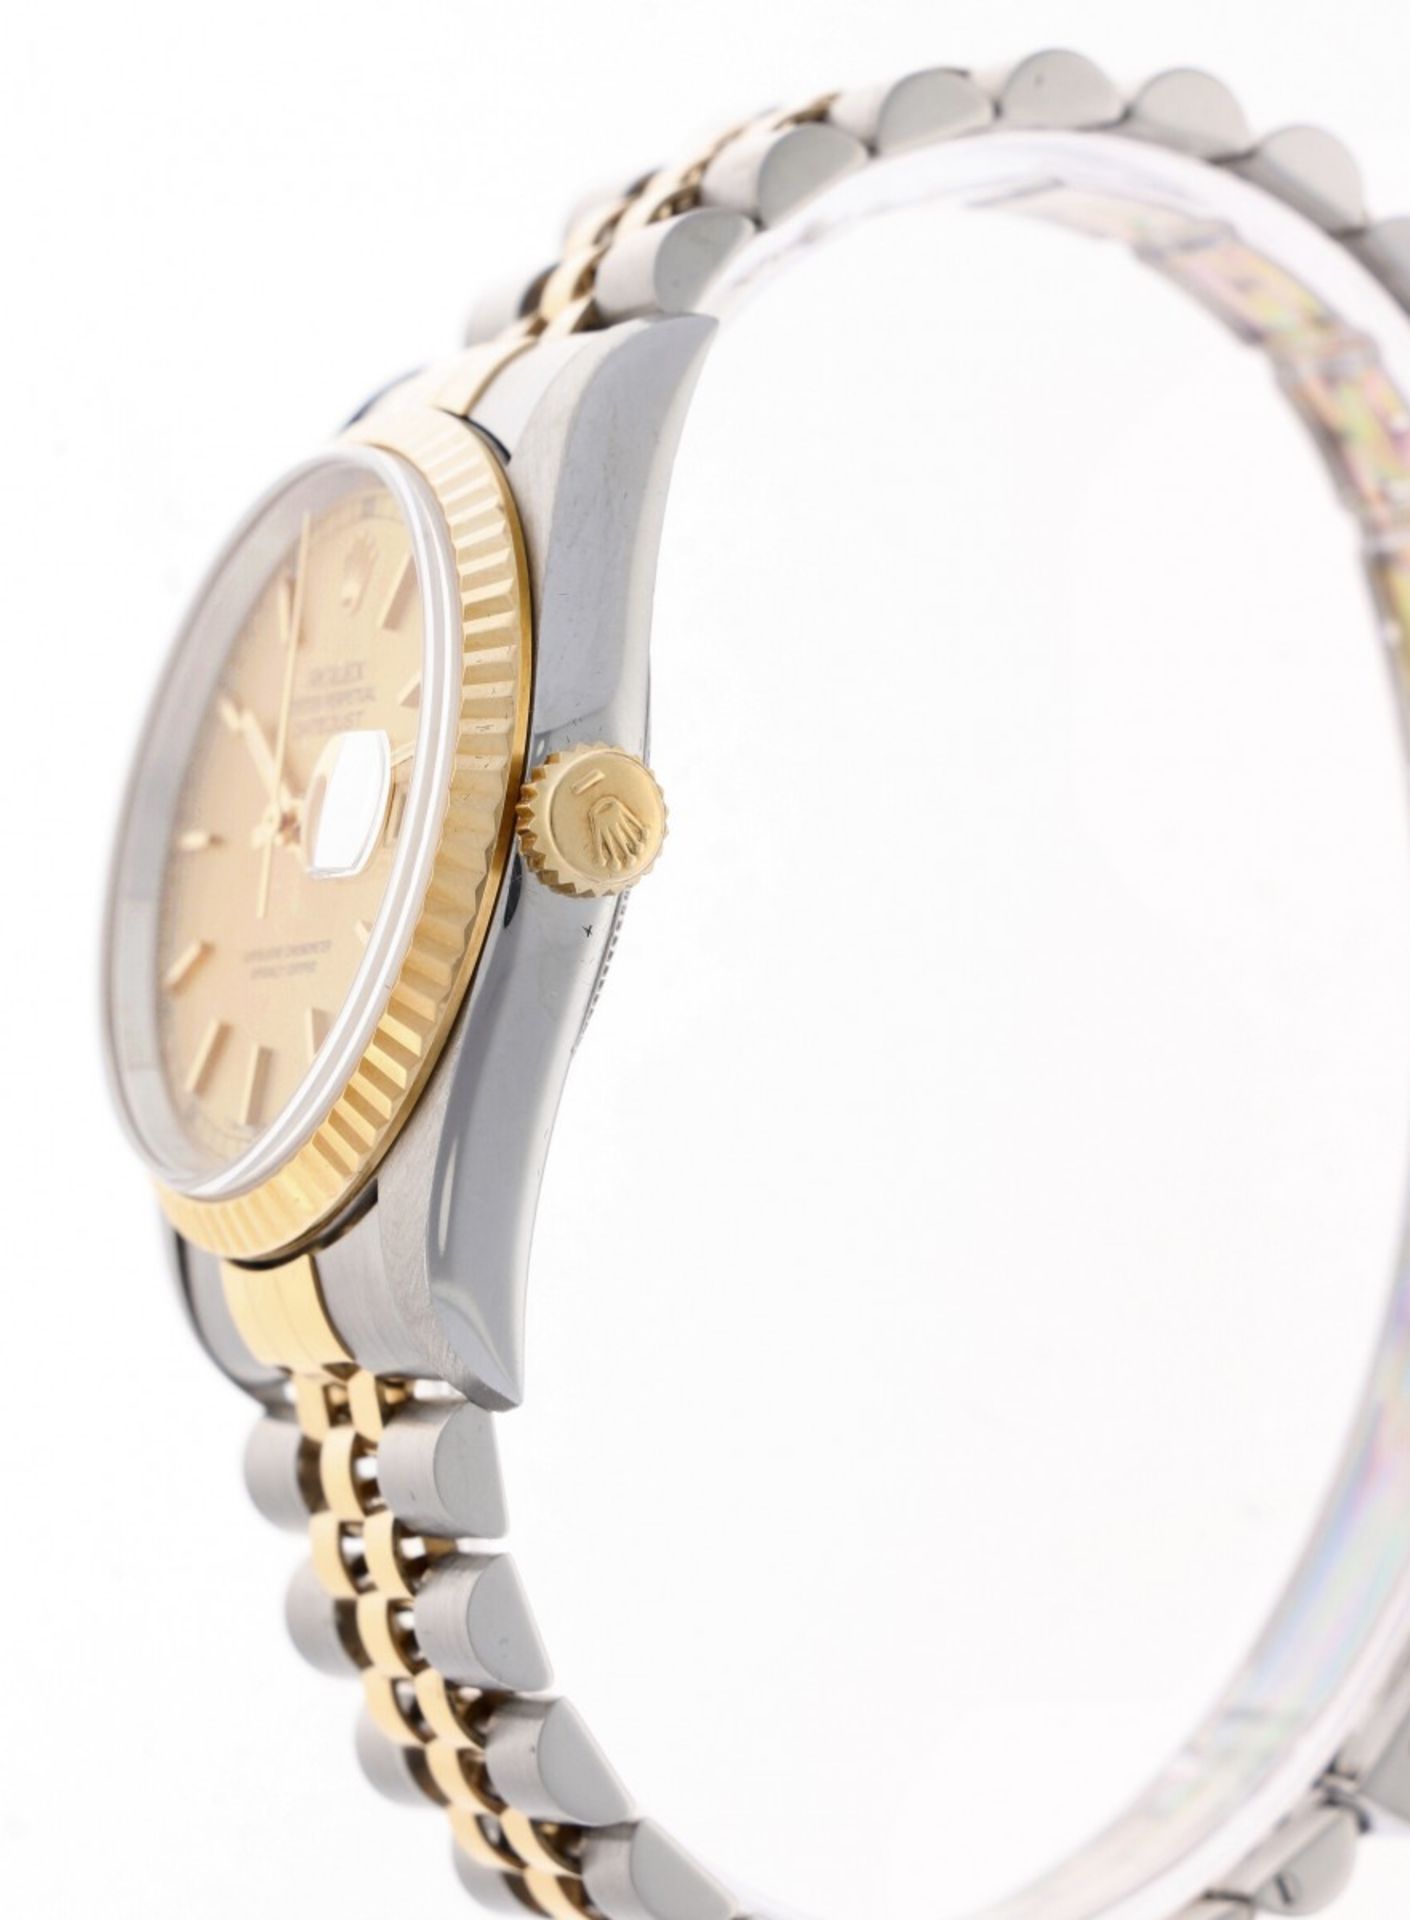 Rolex Datejust 16233 - Men's watch - ca. 1996 - Image 5 of 5